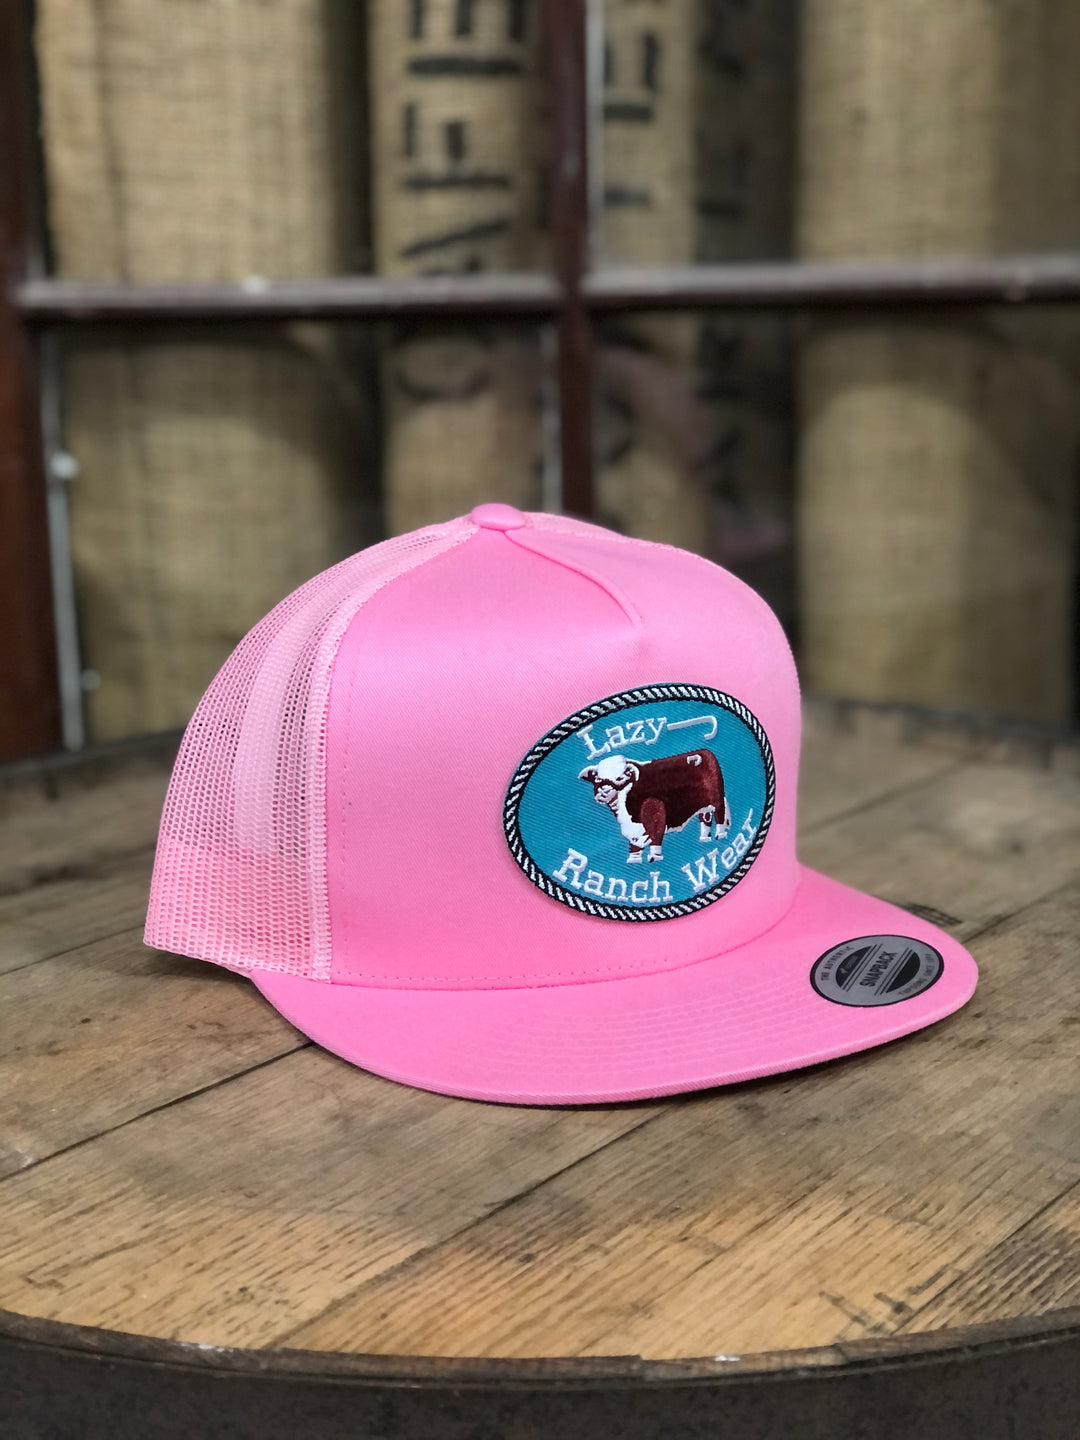 Lazy J Ranch Wear Pink & Pink 4" Original Patch Cap